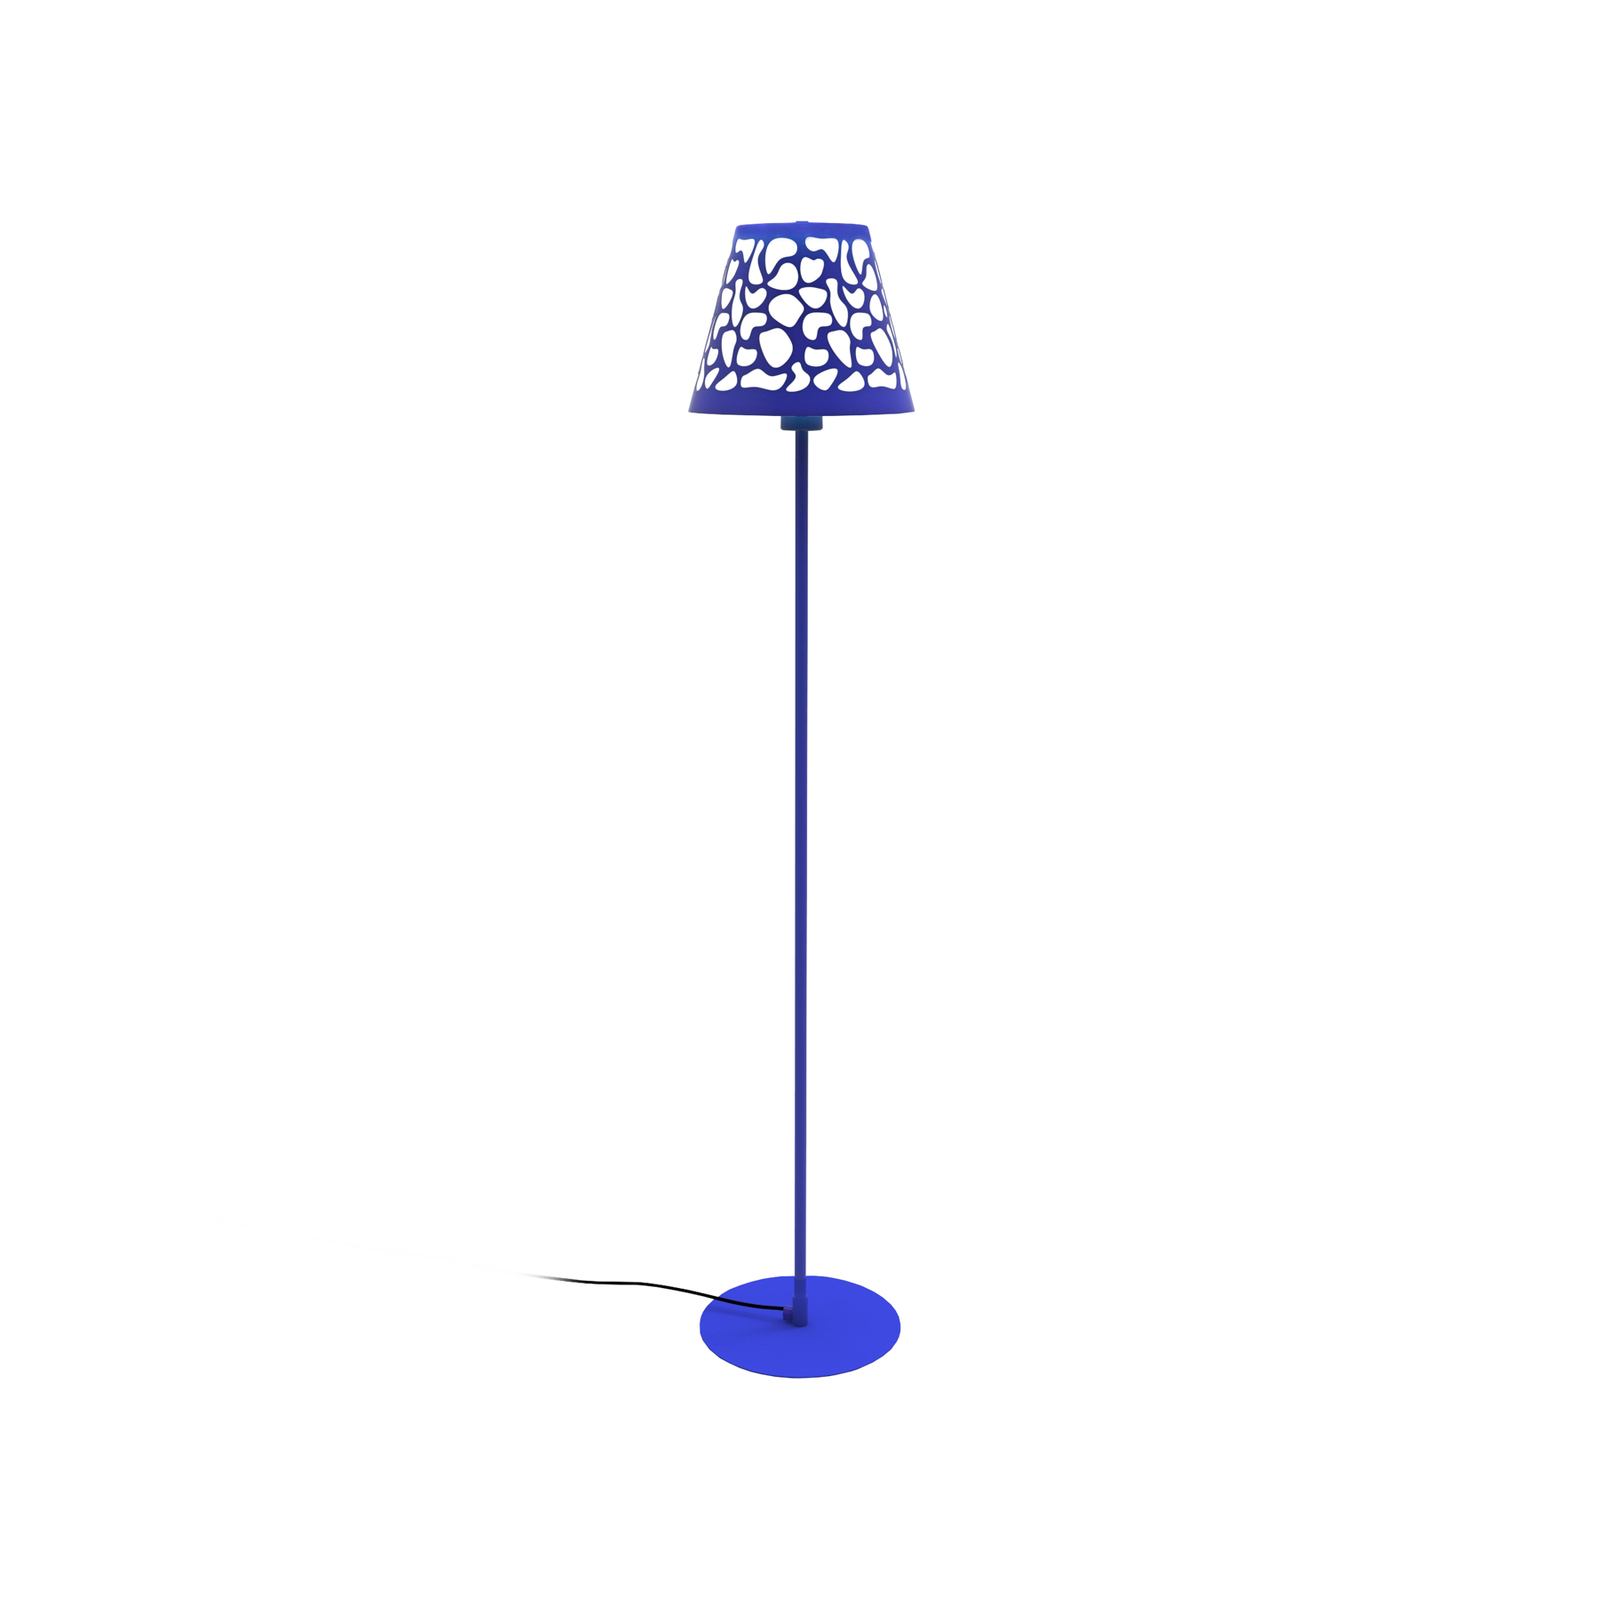 Aluminor Nihoa lampadaire motif ajouré bleu/blanc